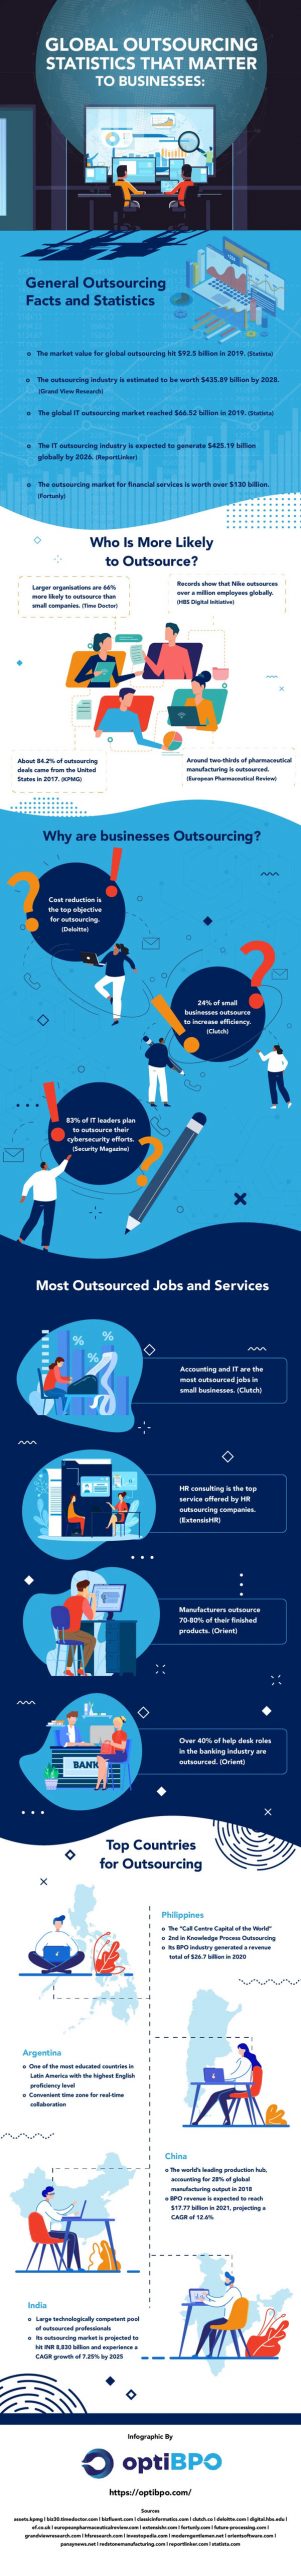 global outsourcing statistics optibpo infographic